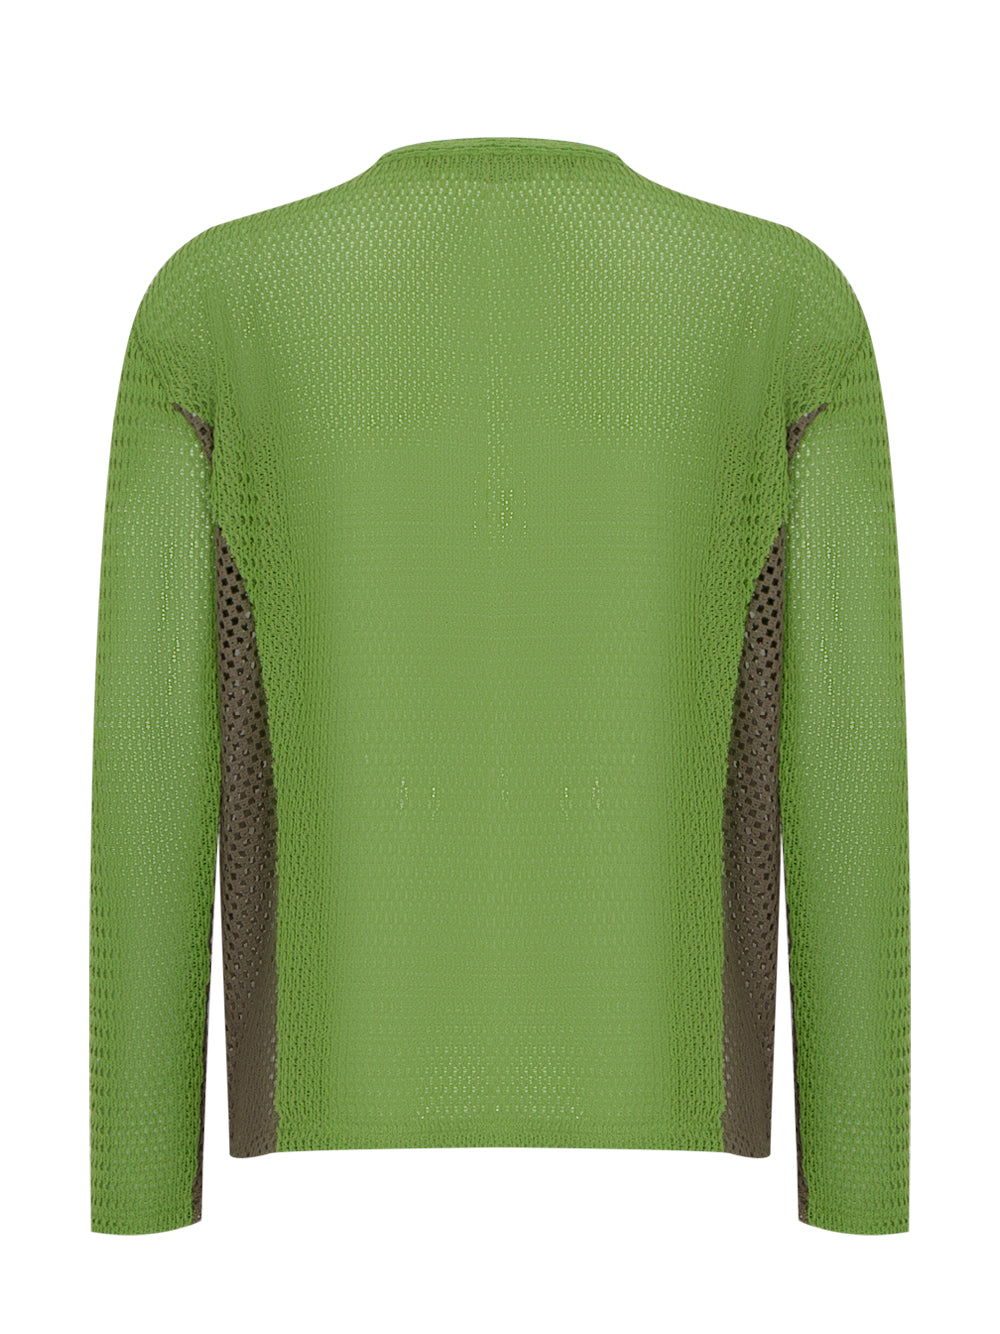 Dellen Net Crew-neck Sweater (Green)